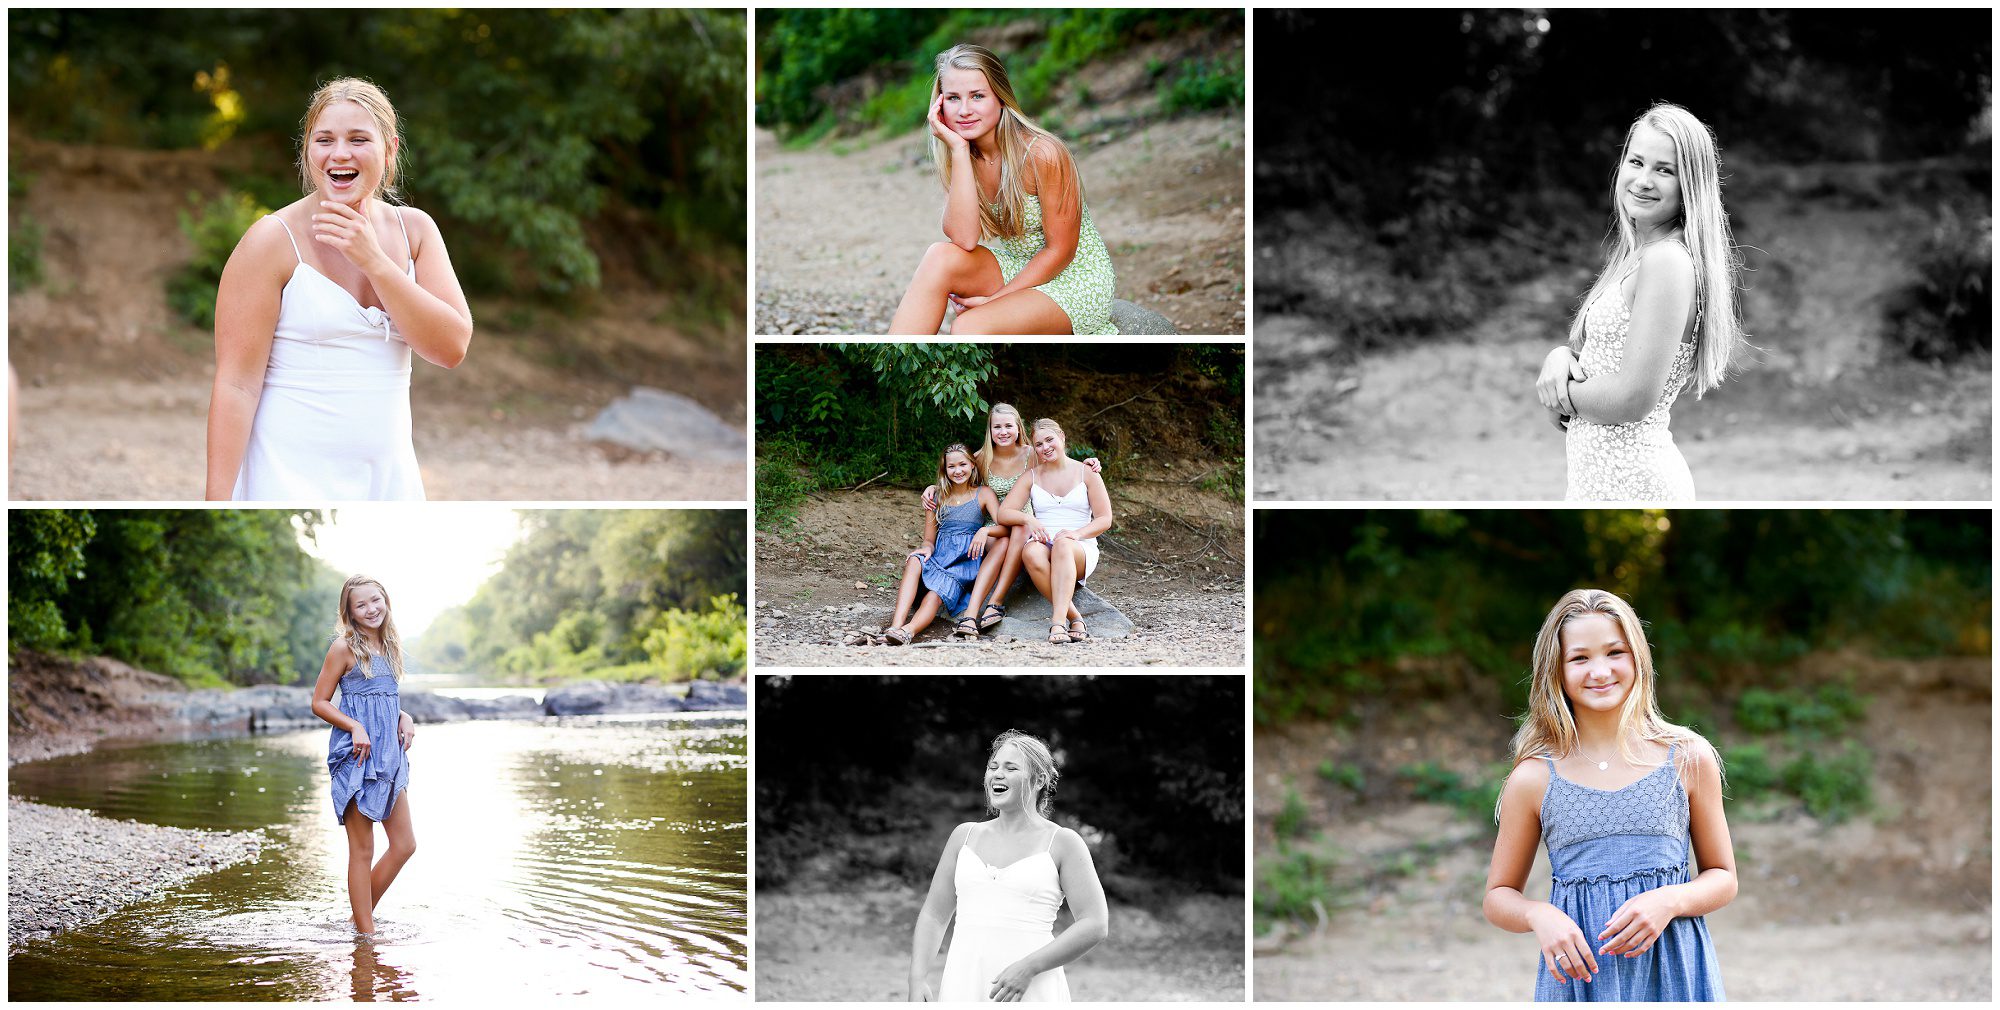 Lake Monticello Sister Summer Portraits in Fluvanna sisterhood photographer Charlottesville Pictures Cville Photography Virginia RIver  Siblings Teen Tween